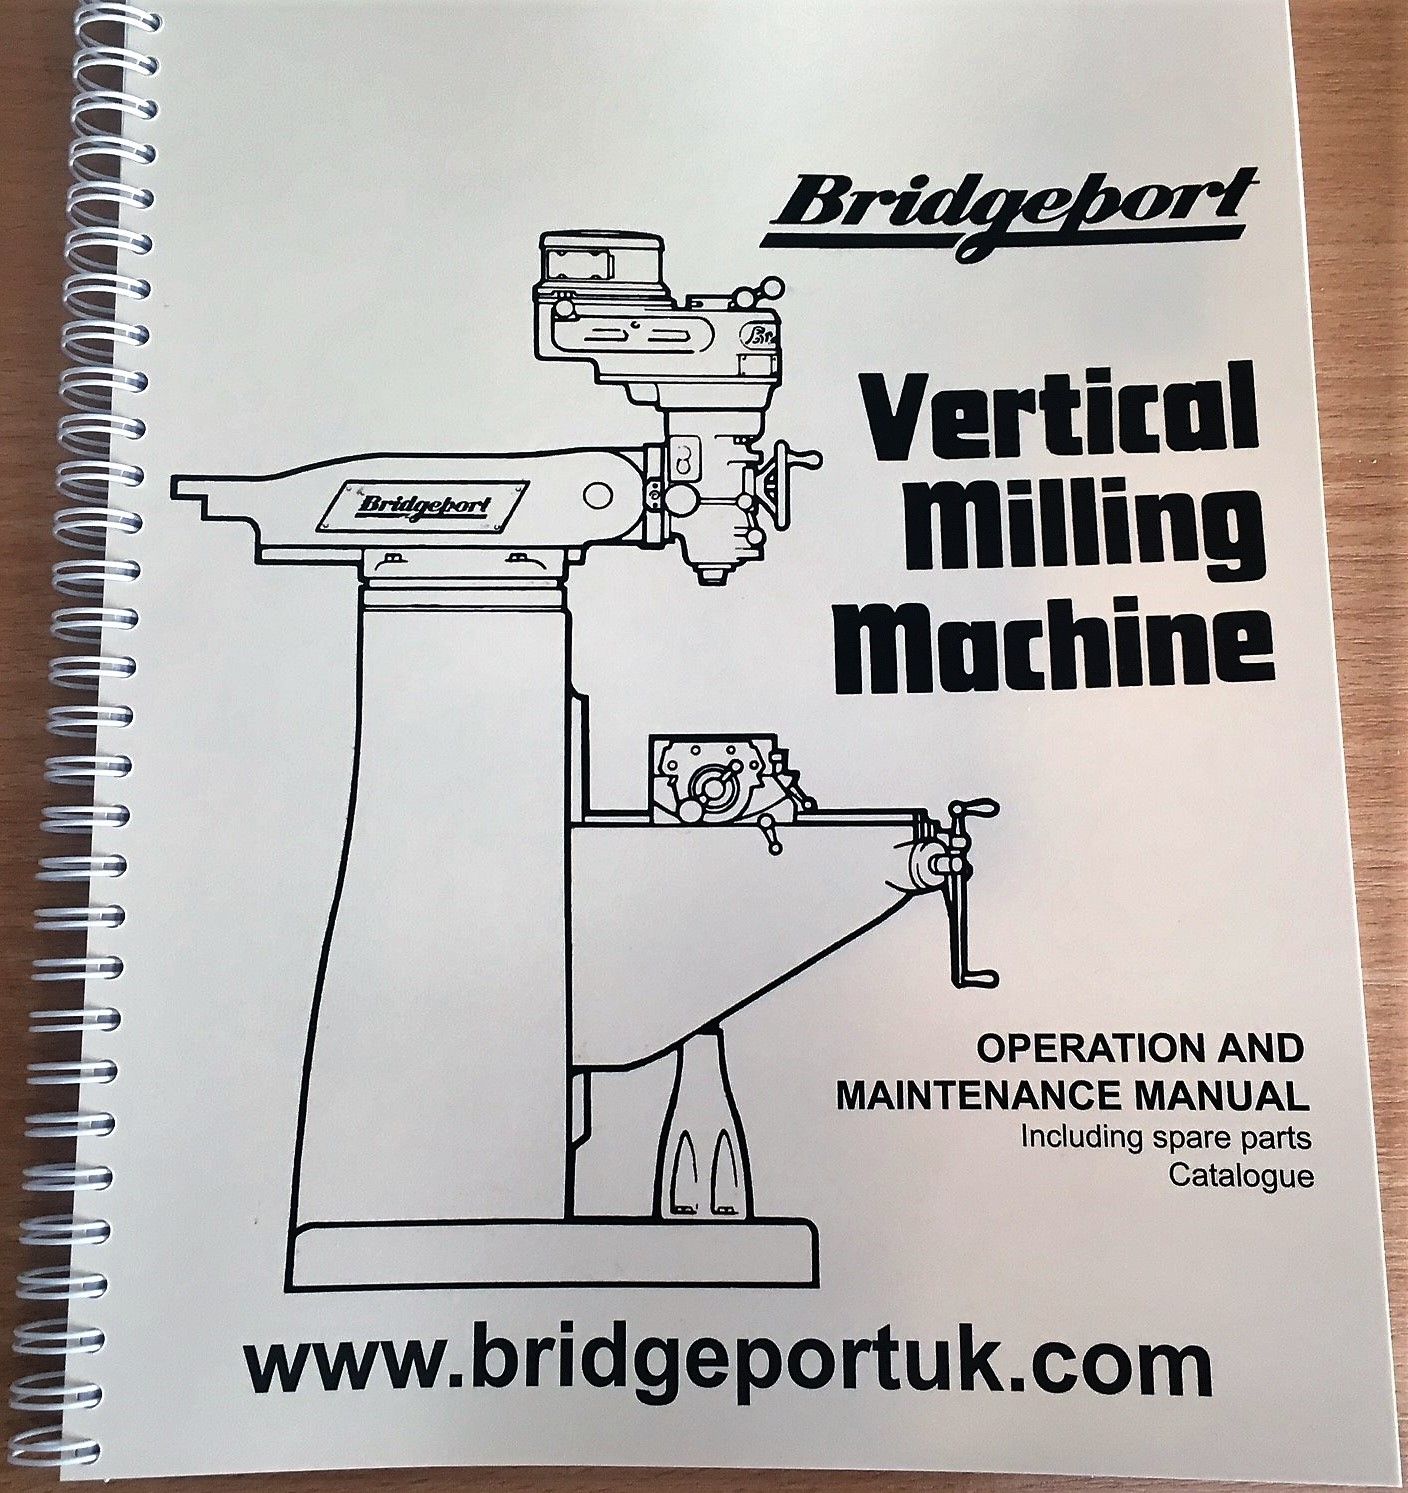 Bridgeport Manual/Bridgeport Original User Manual